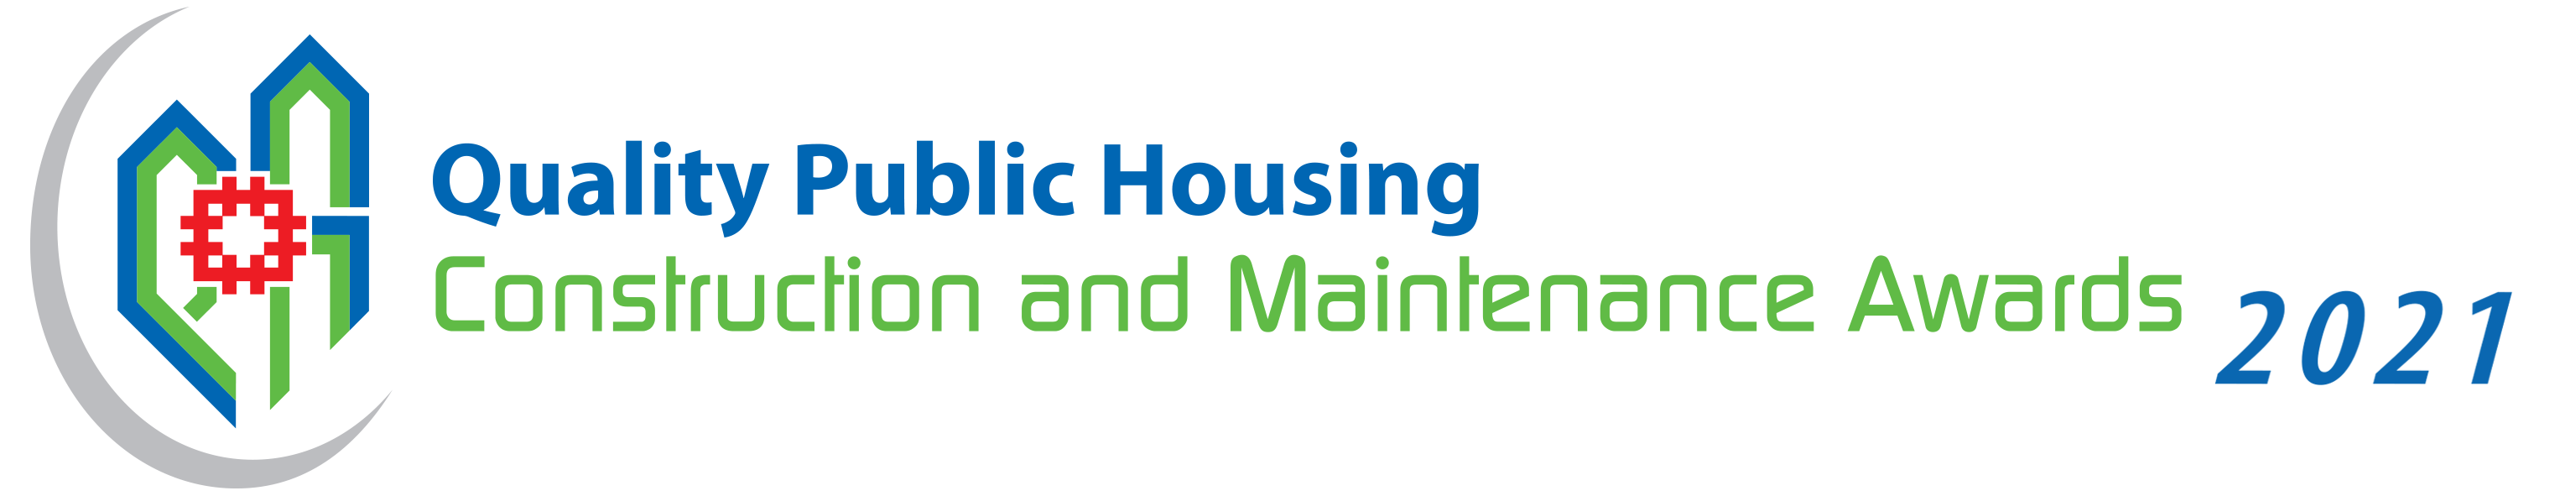 Quality Public Housing Construction and Maintenance Awards 2021 logo